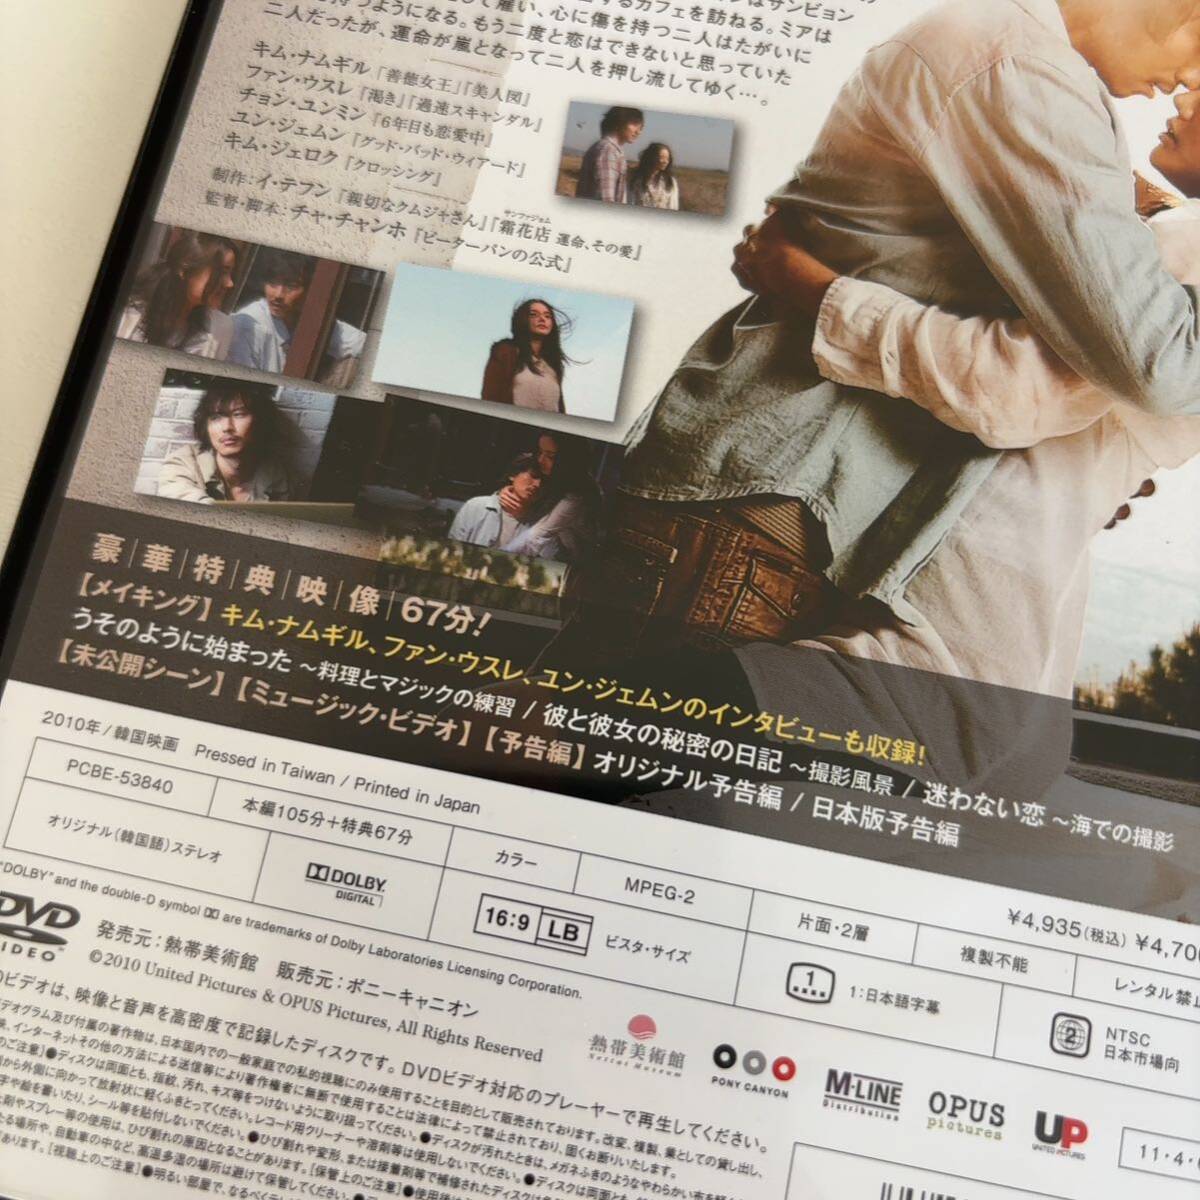 韓国映画『愛の運命-暴風前夜-』('10韓国) 国内セル版